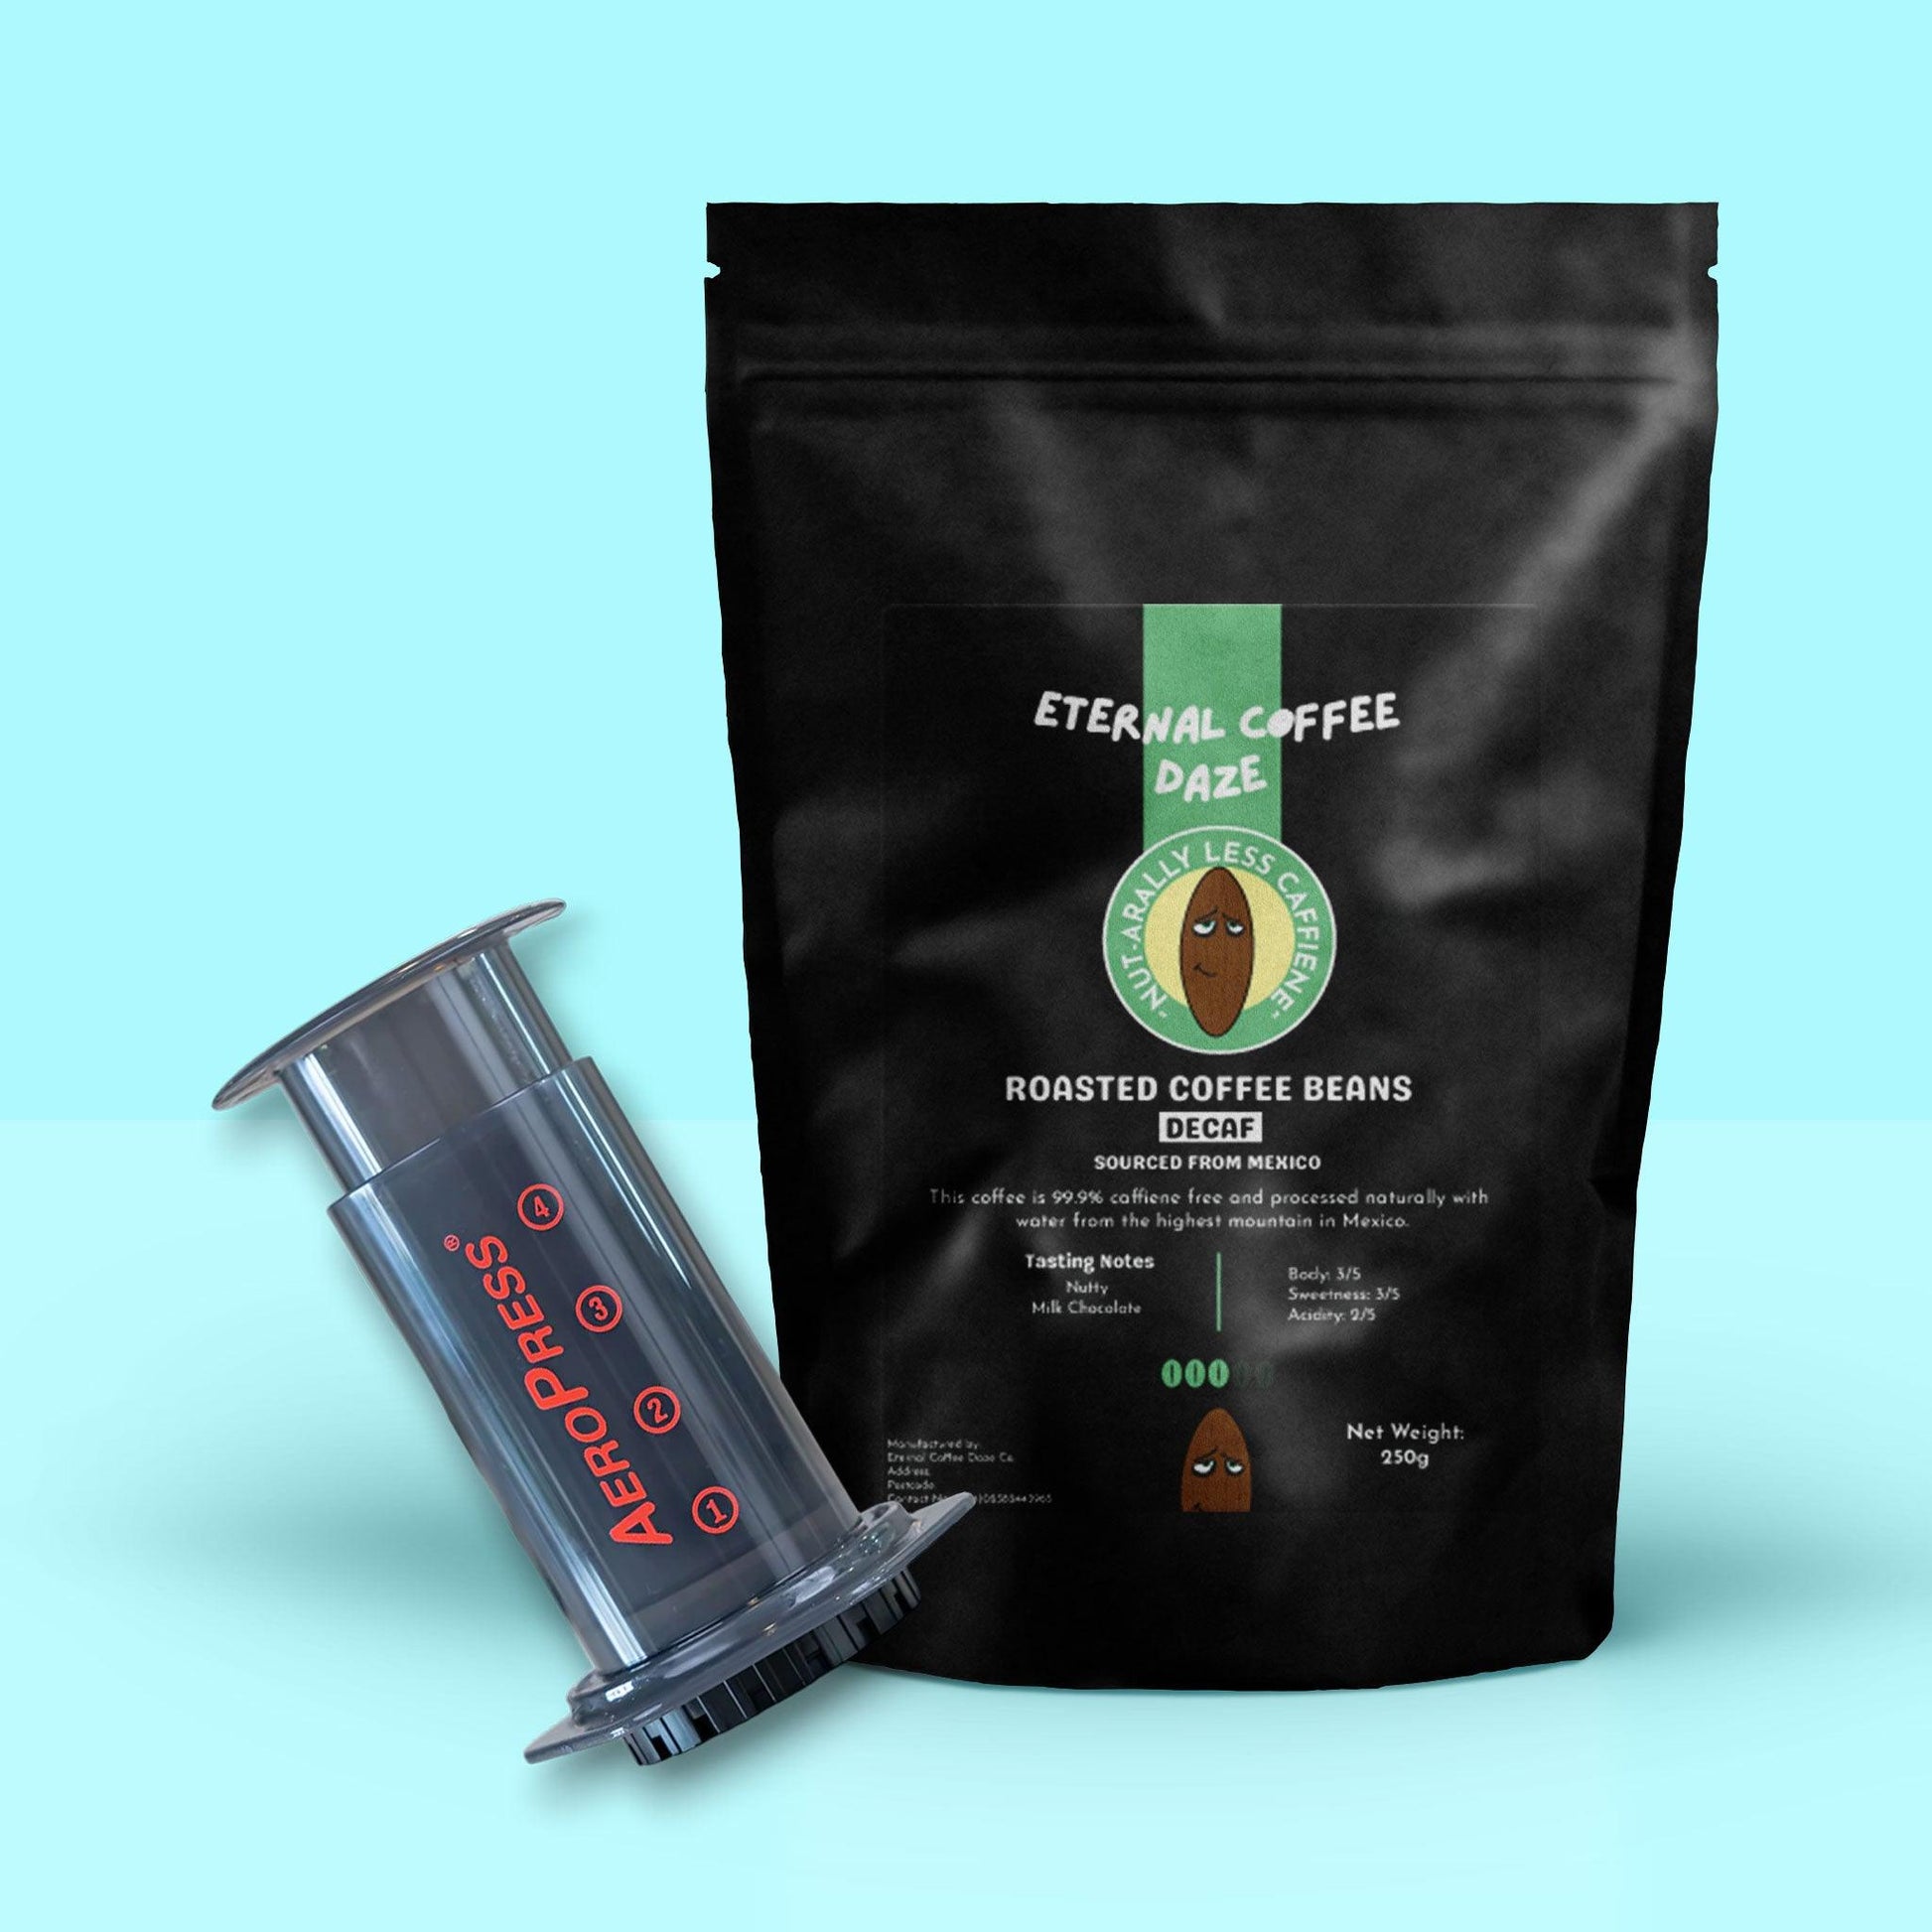 Aeropress and Coffee Bundle - Eternal Coffee Daze